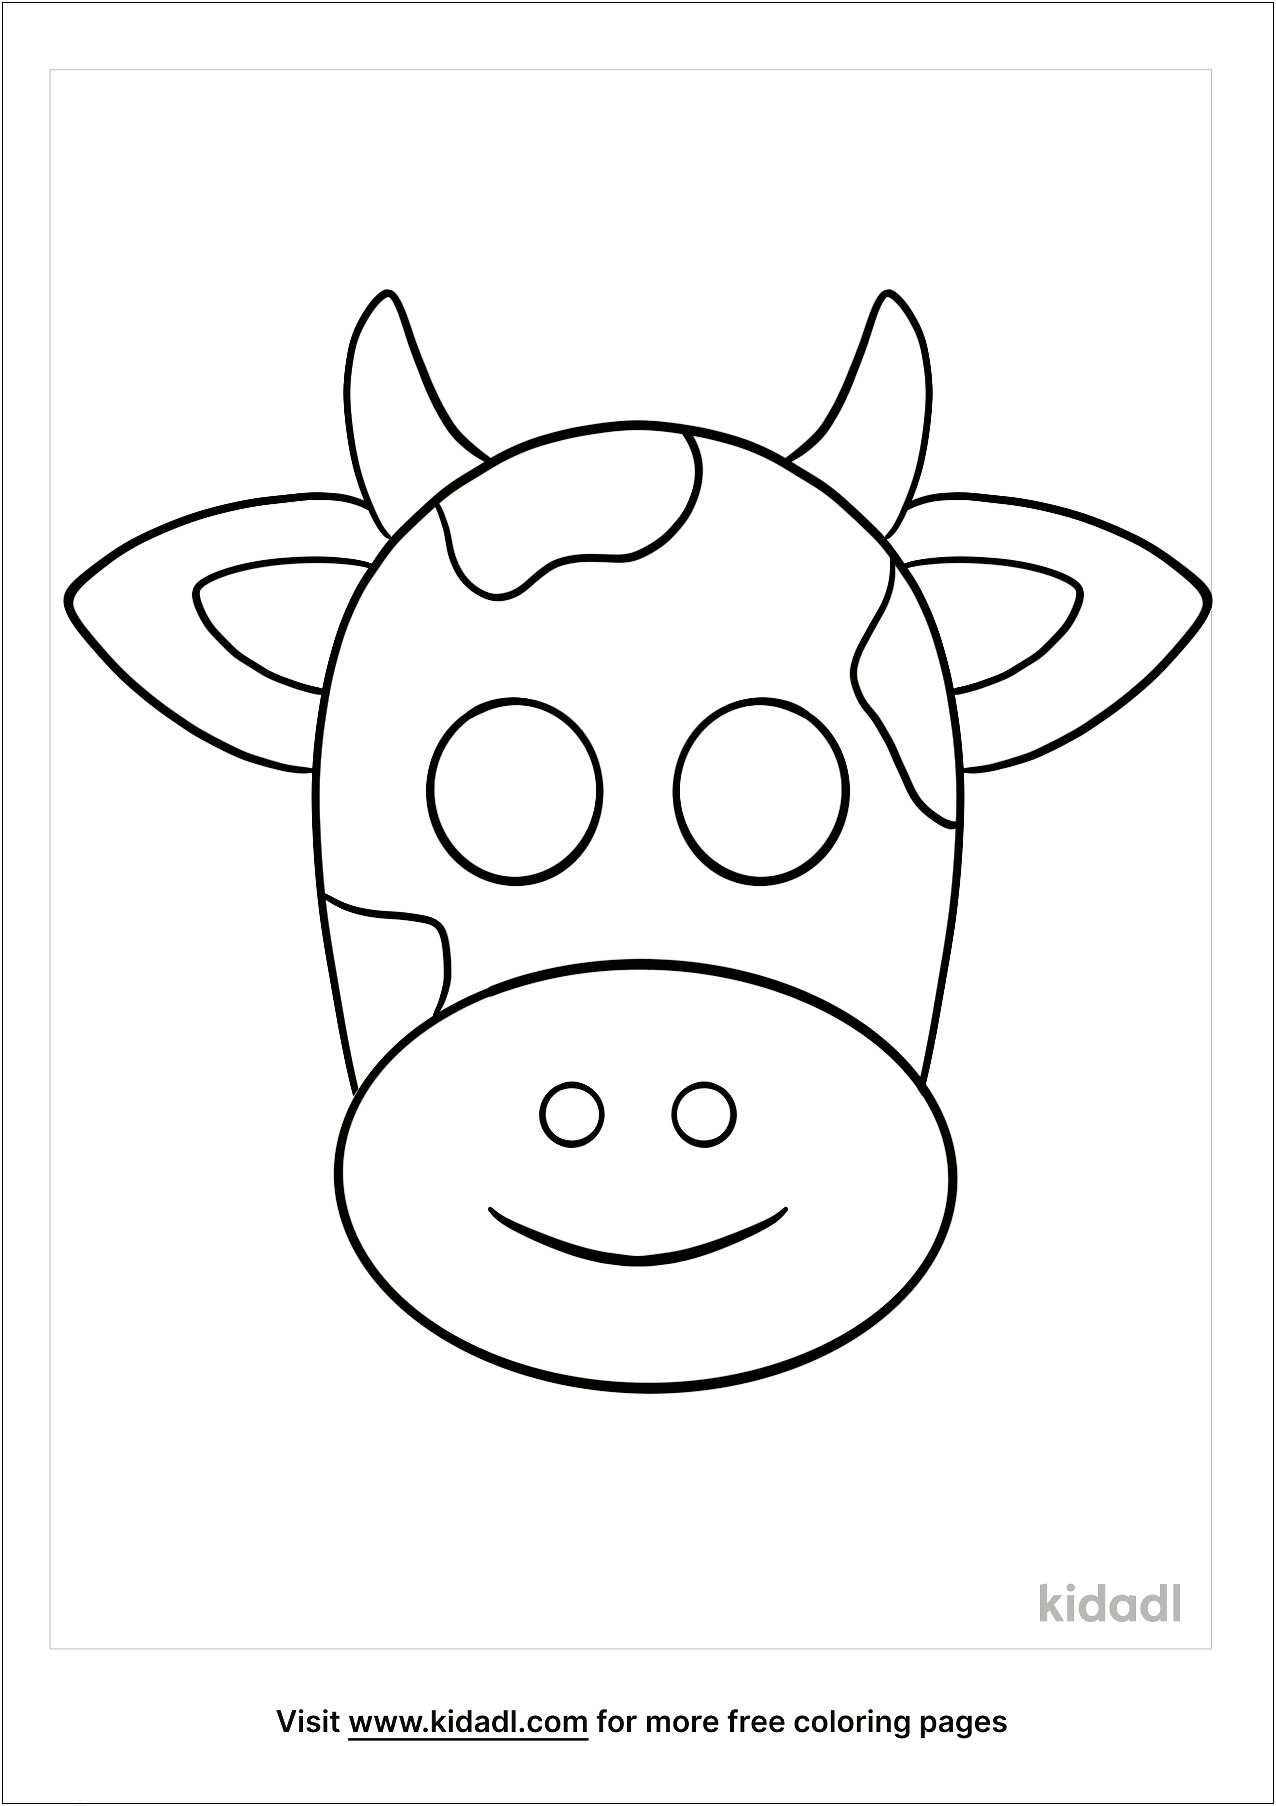 free-printable-animal-templates-for-kids-templates-resume-designs